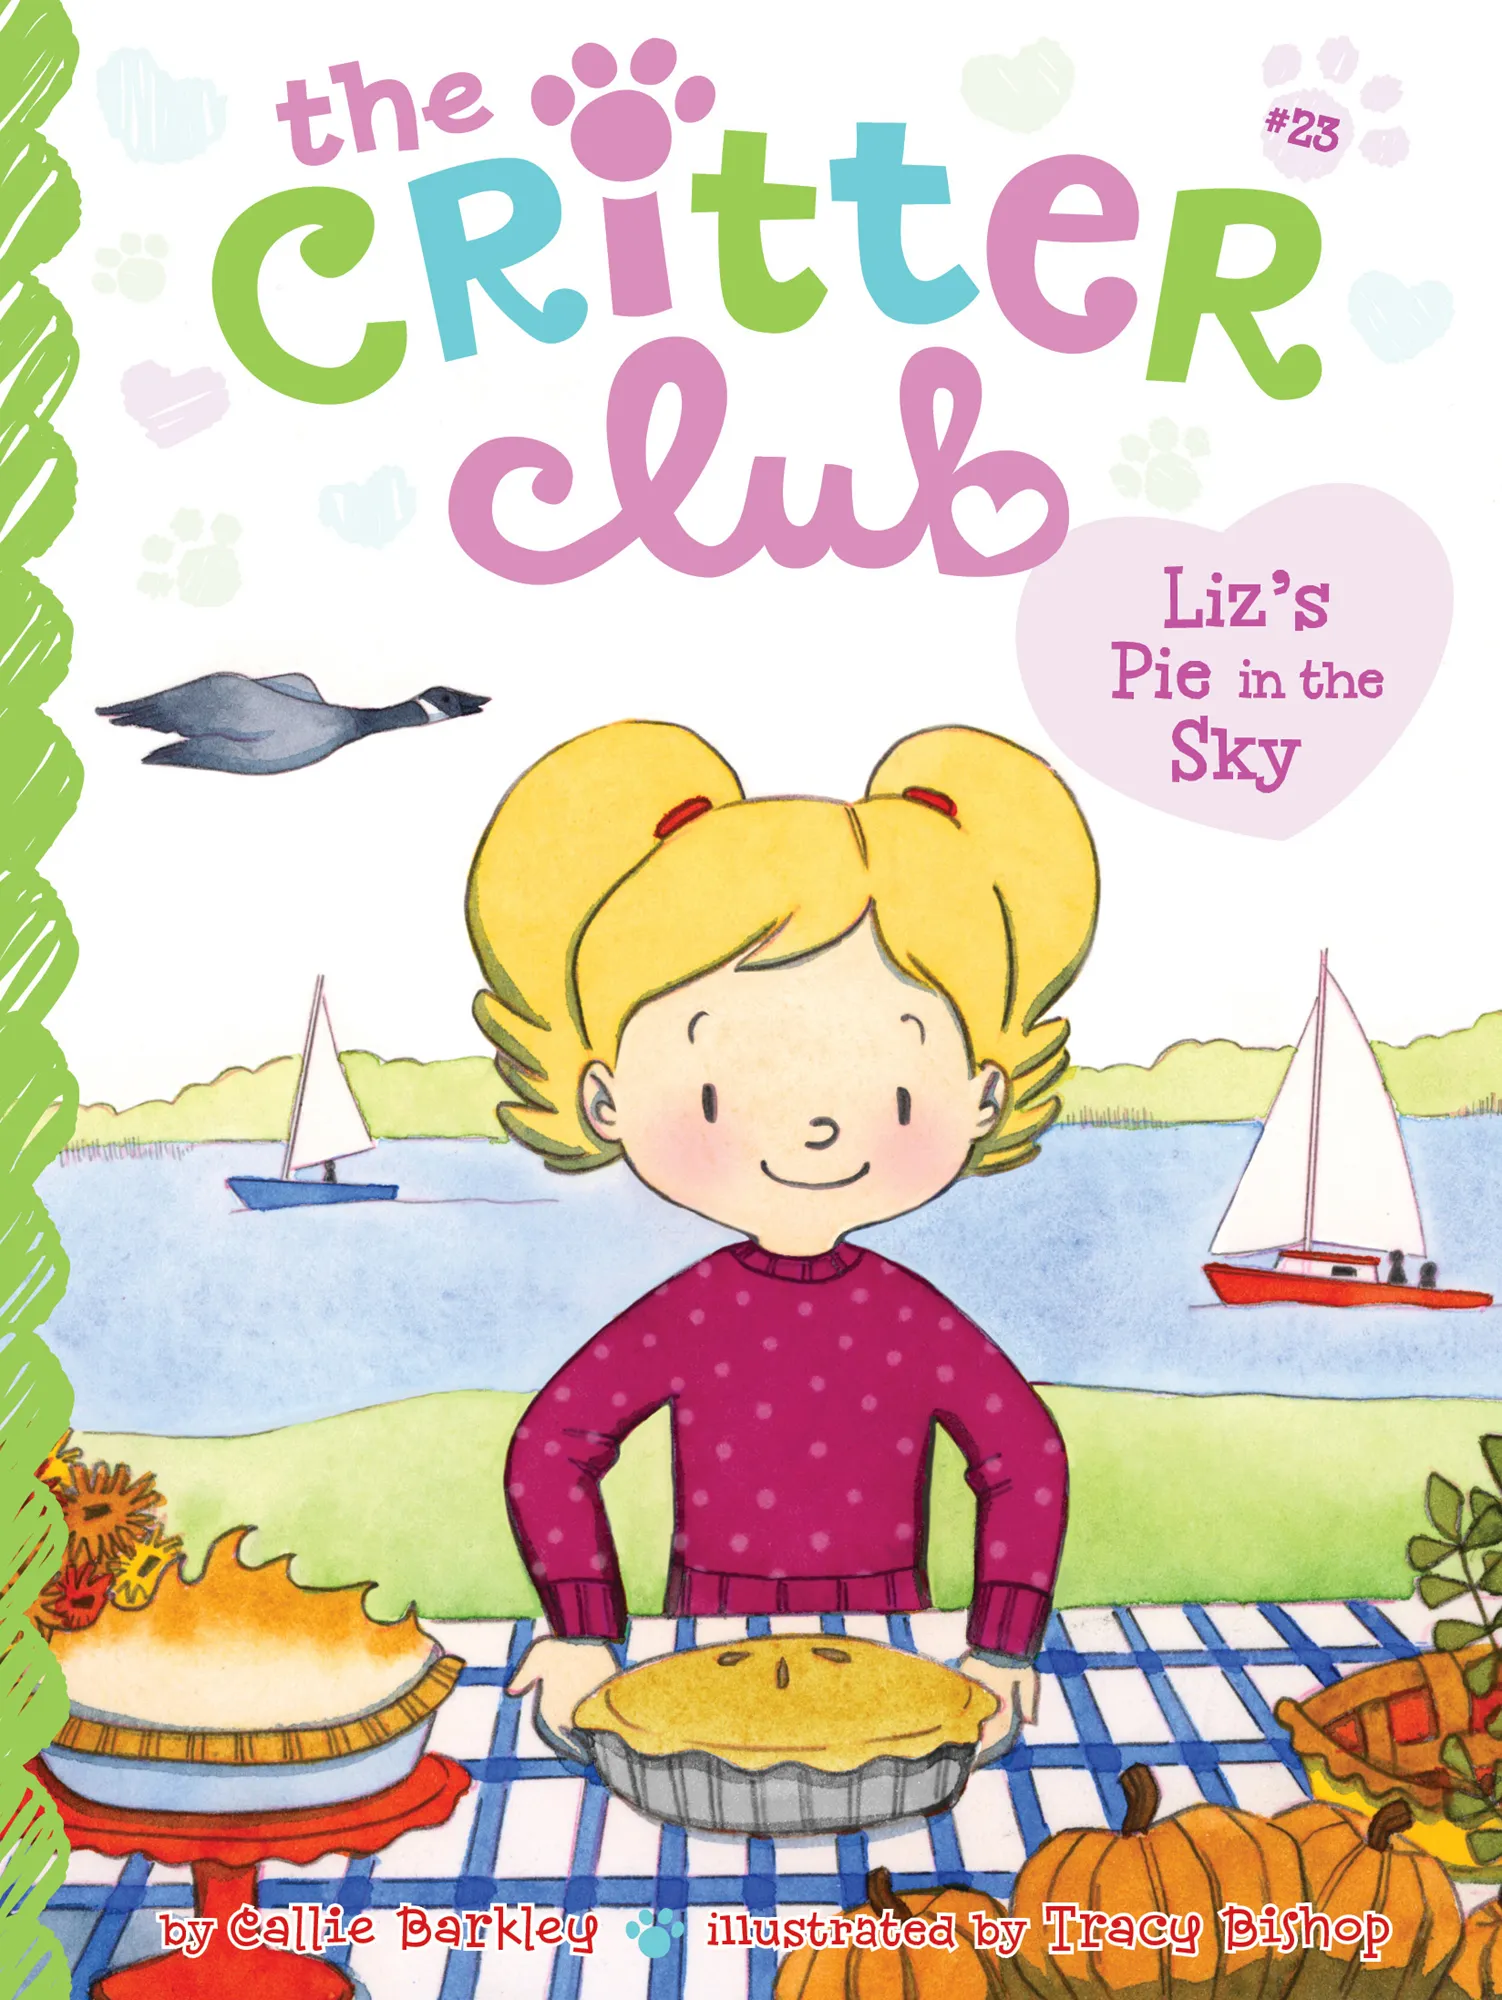 Liz's Pie in the Sky (The Critter Club #23)